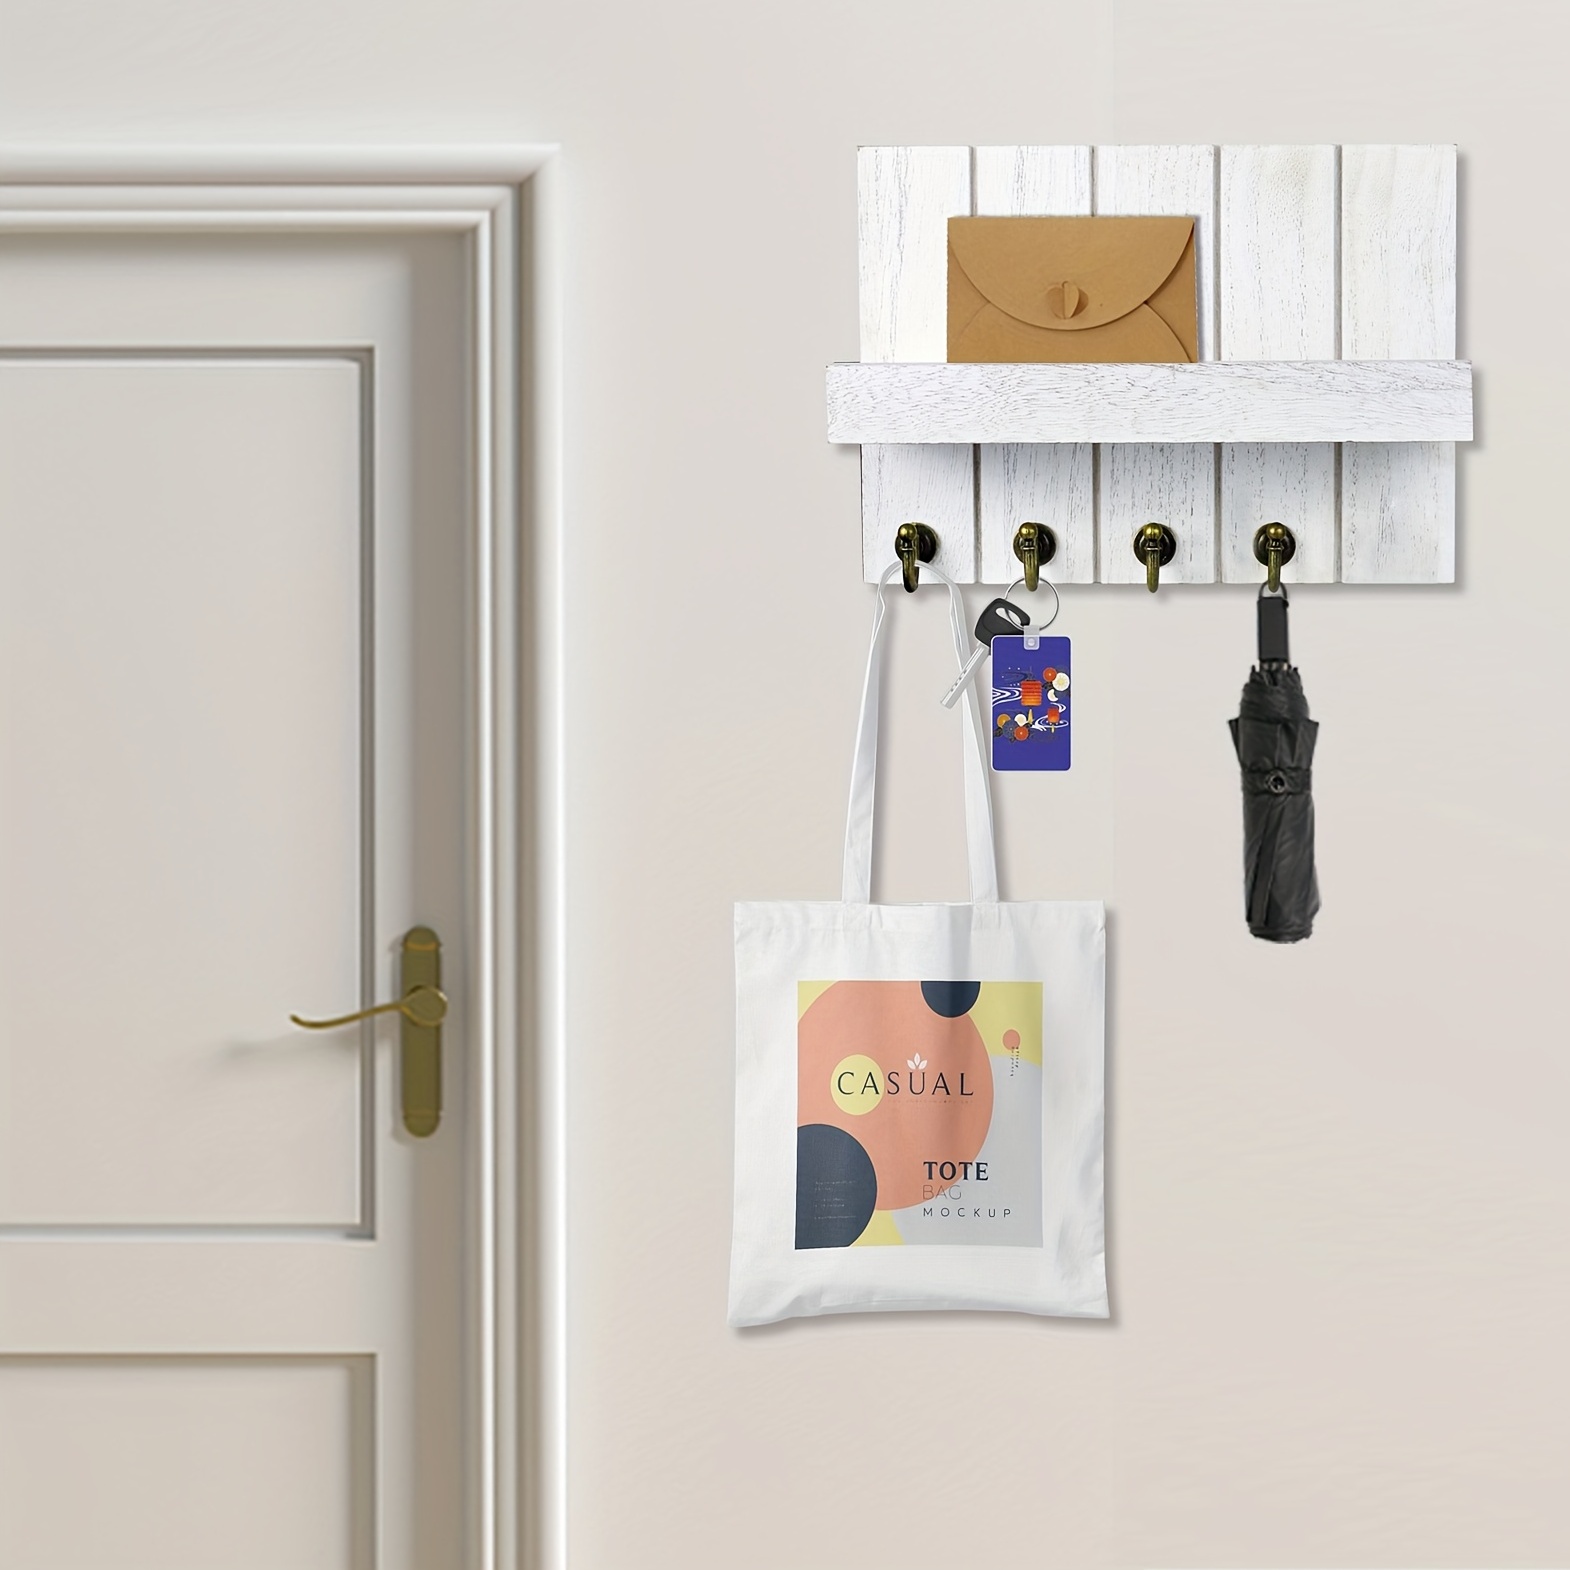 Wood Key Mail Holder Wall-Mounted - Key Holder with 5 Vintage Key Hooks, Key Holder for Wall Decorative, Rustic Key Hanger, Key Rack for Leash, Mail